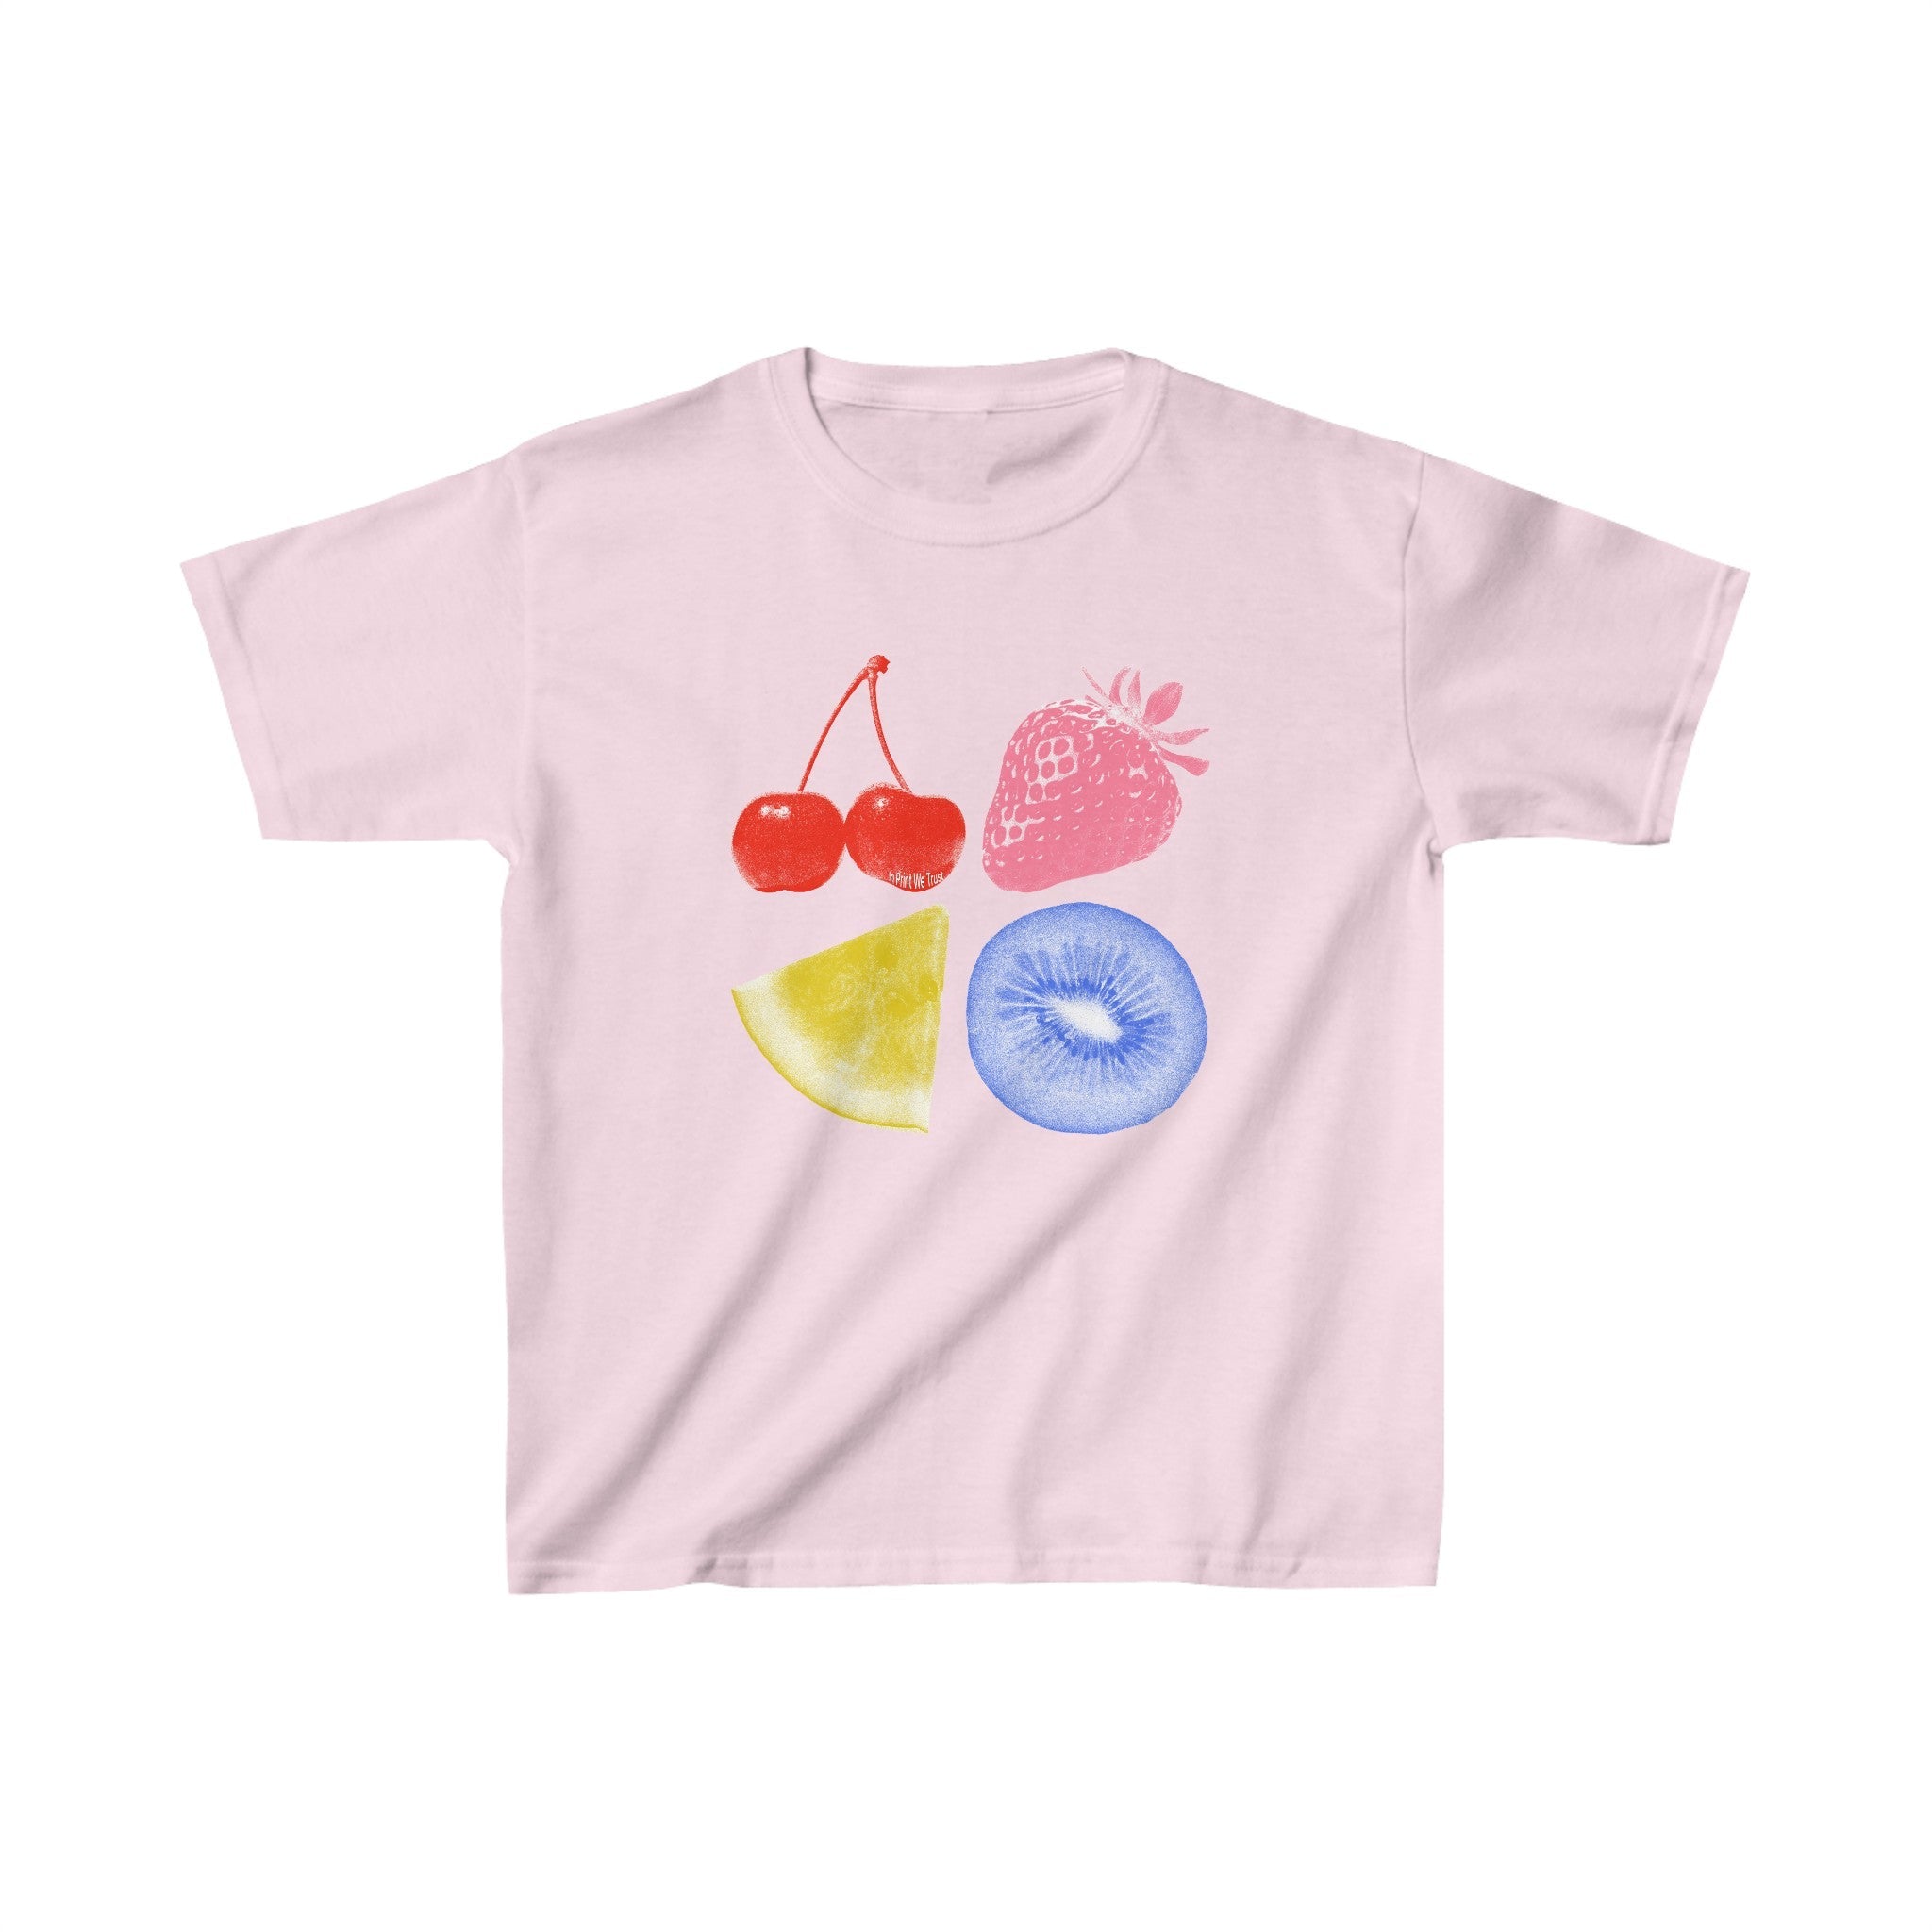 'Fruit Man' baby tee - In Print We Trust